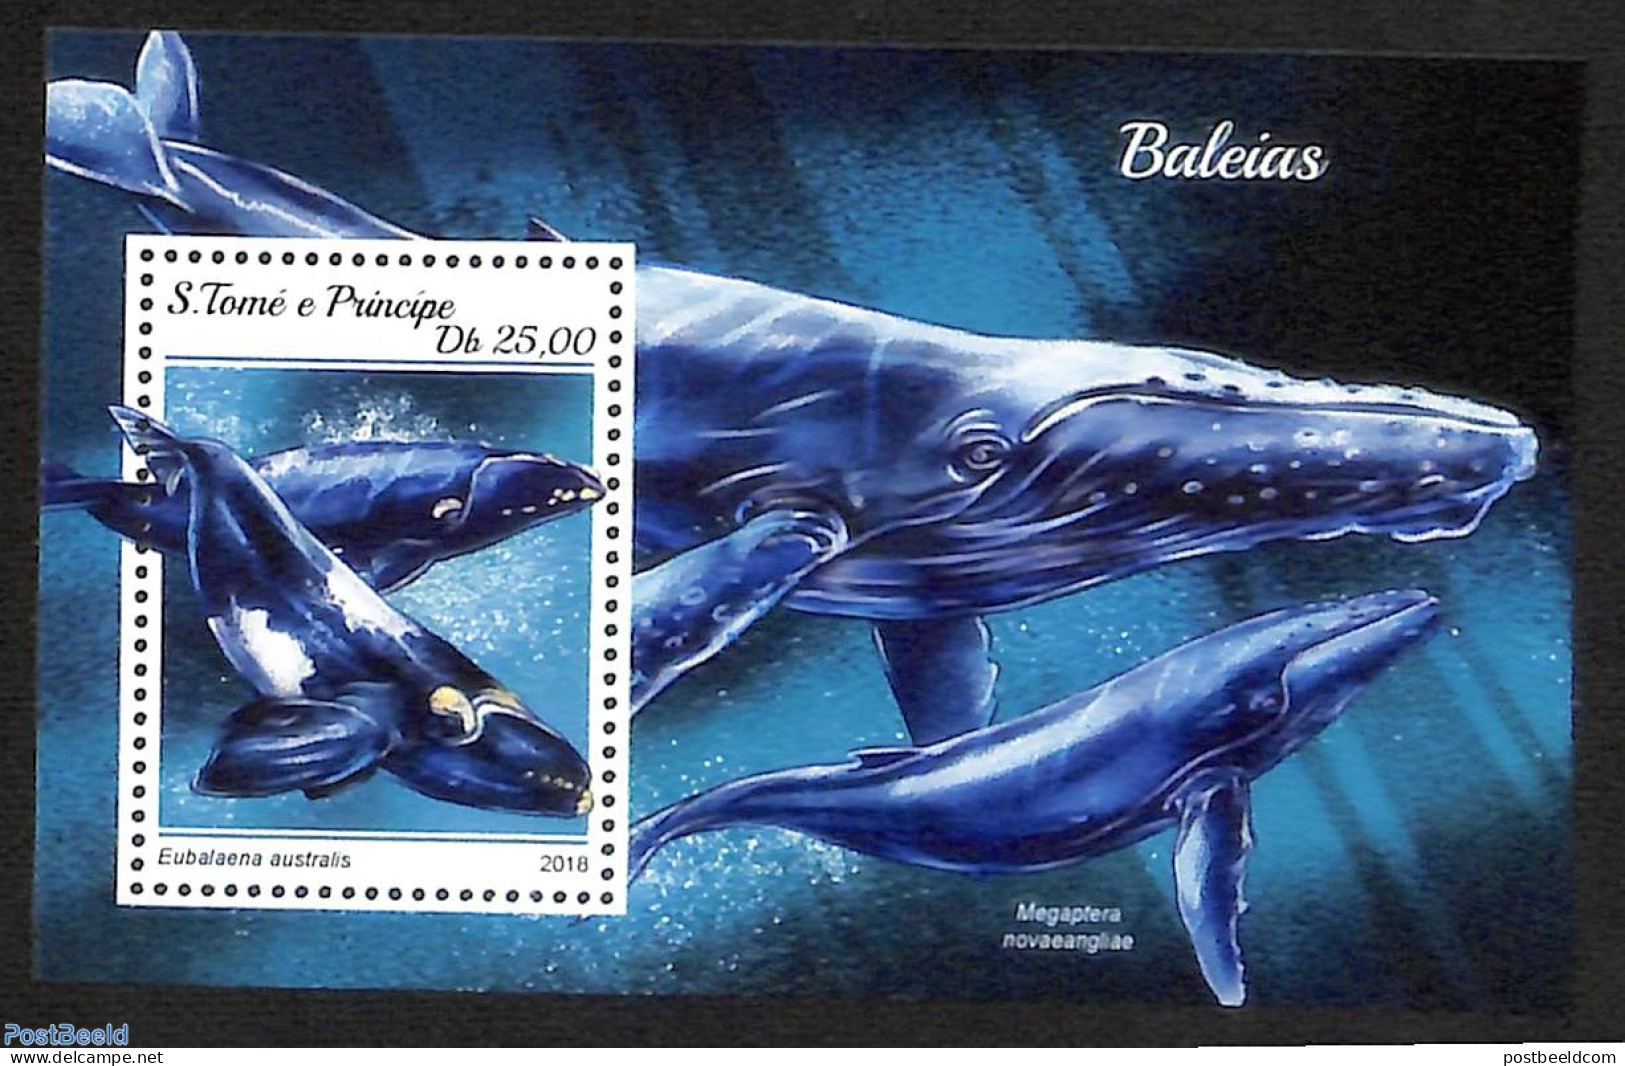 Sao Tome/Principe 2018 Whales, Mint NH, Nature - Sea Mammals - Sao Tomé Y Príncipe